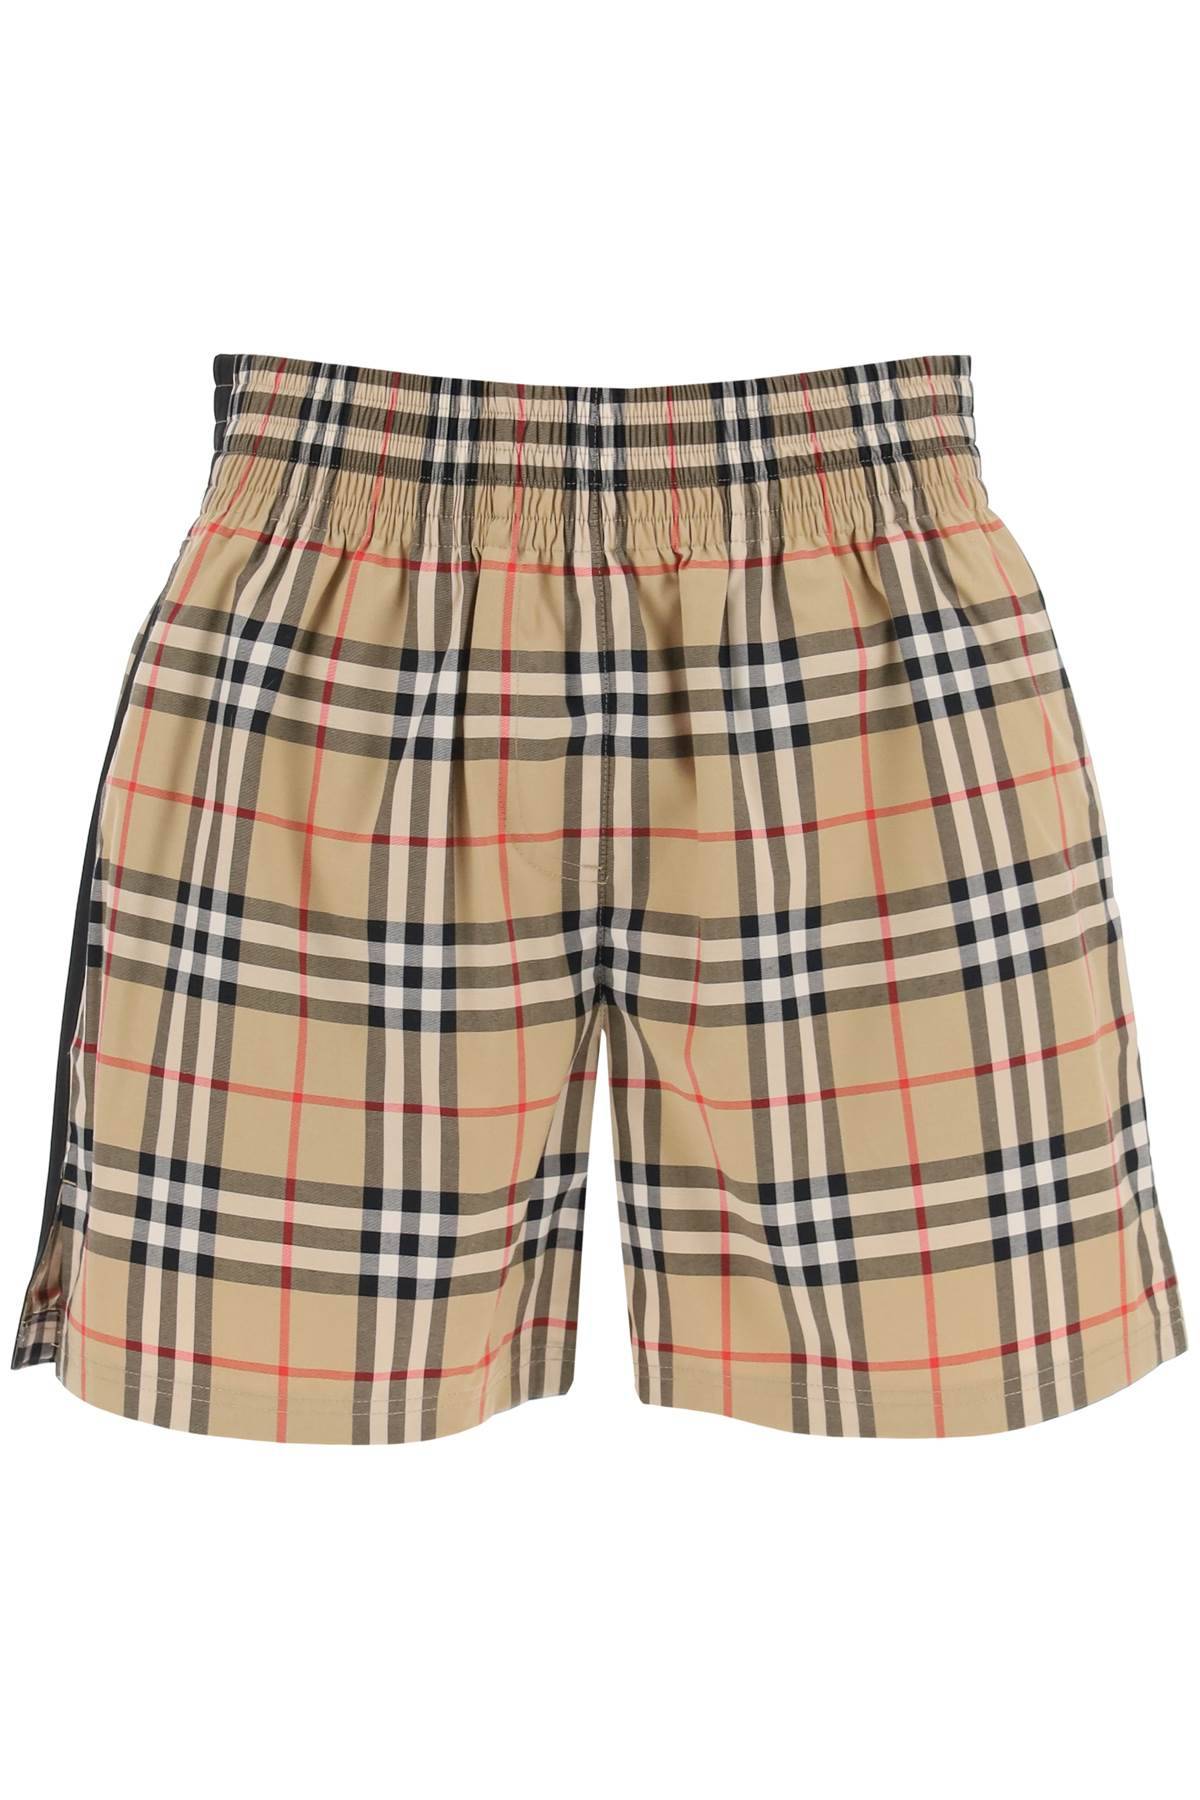 Burberry BURBERRY audrey check shorts